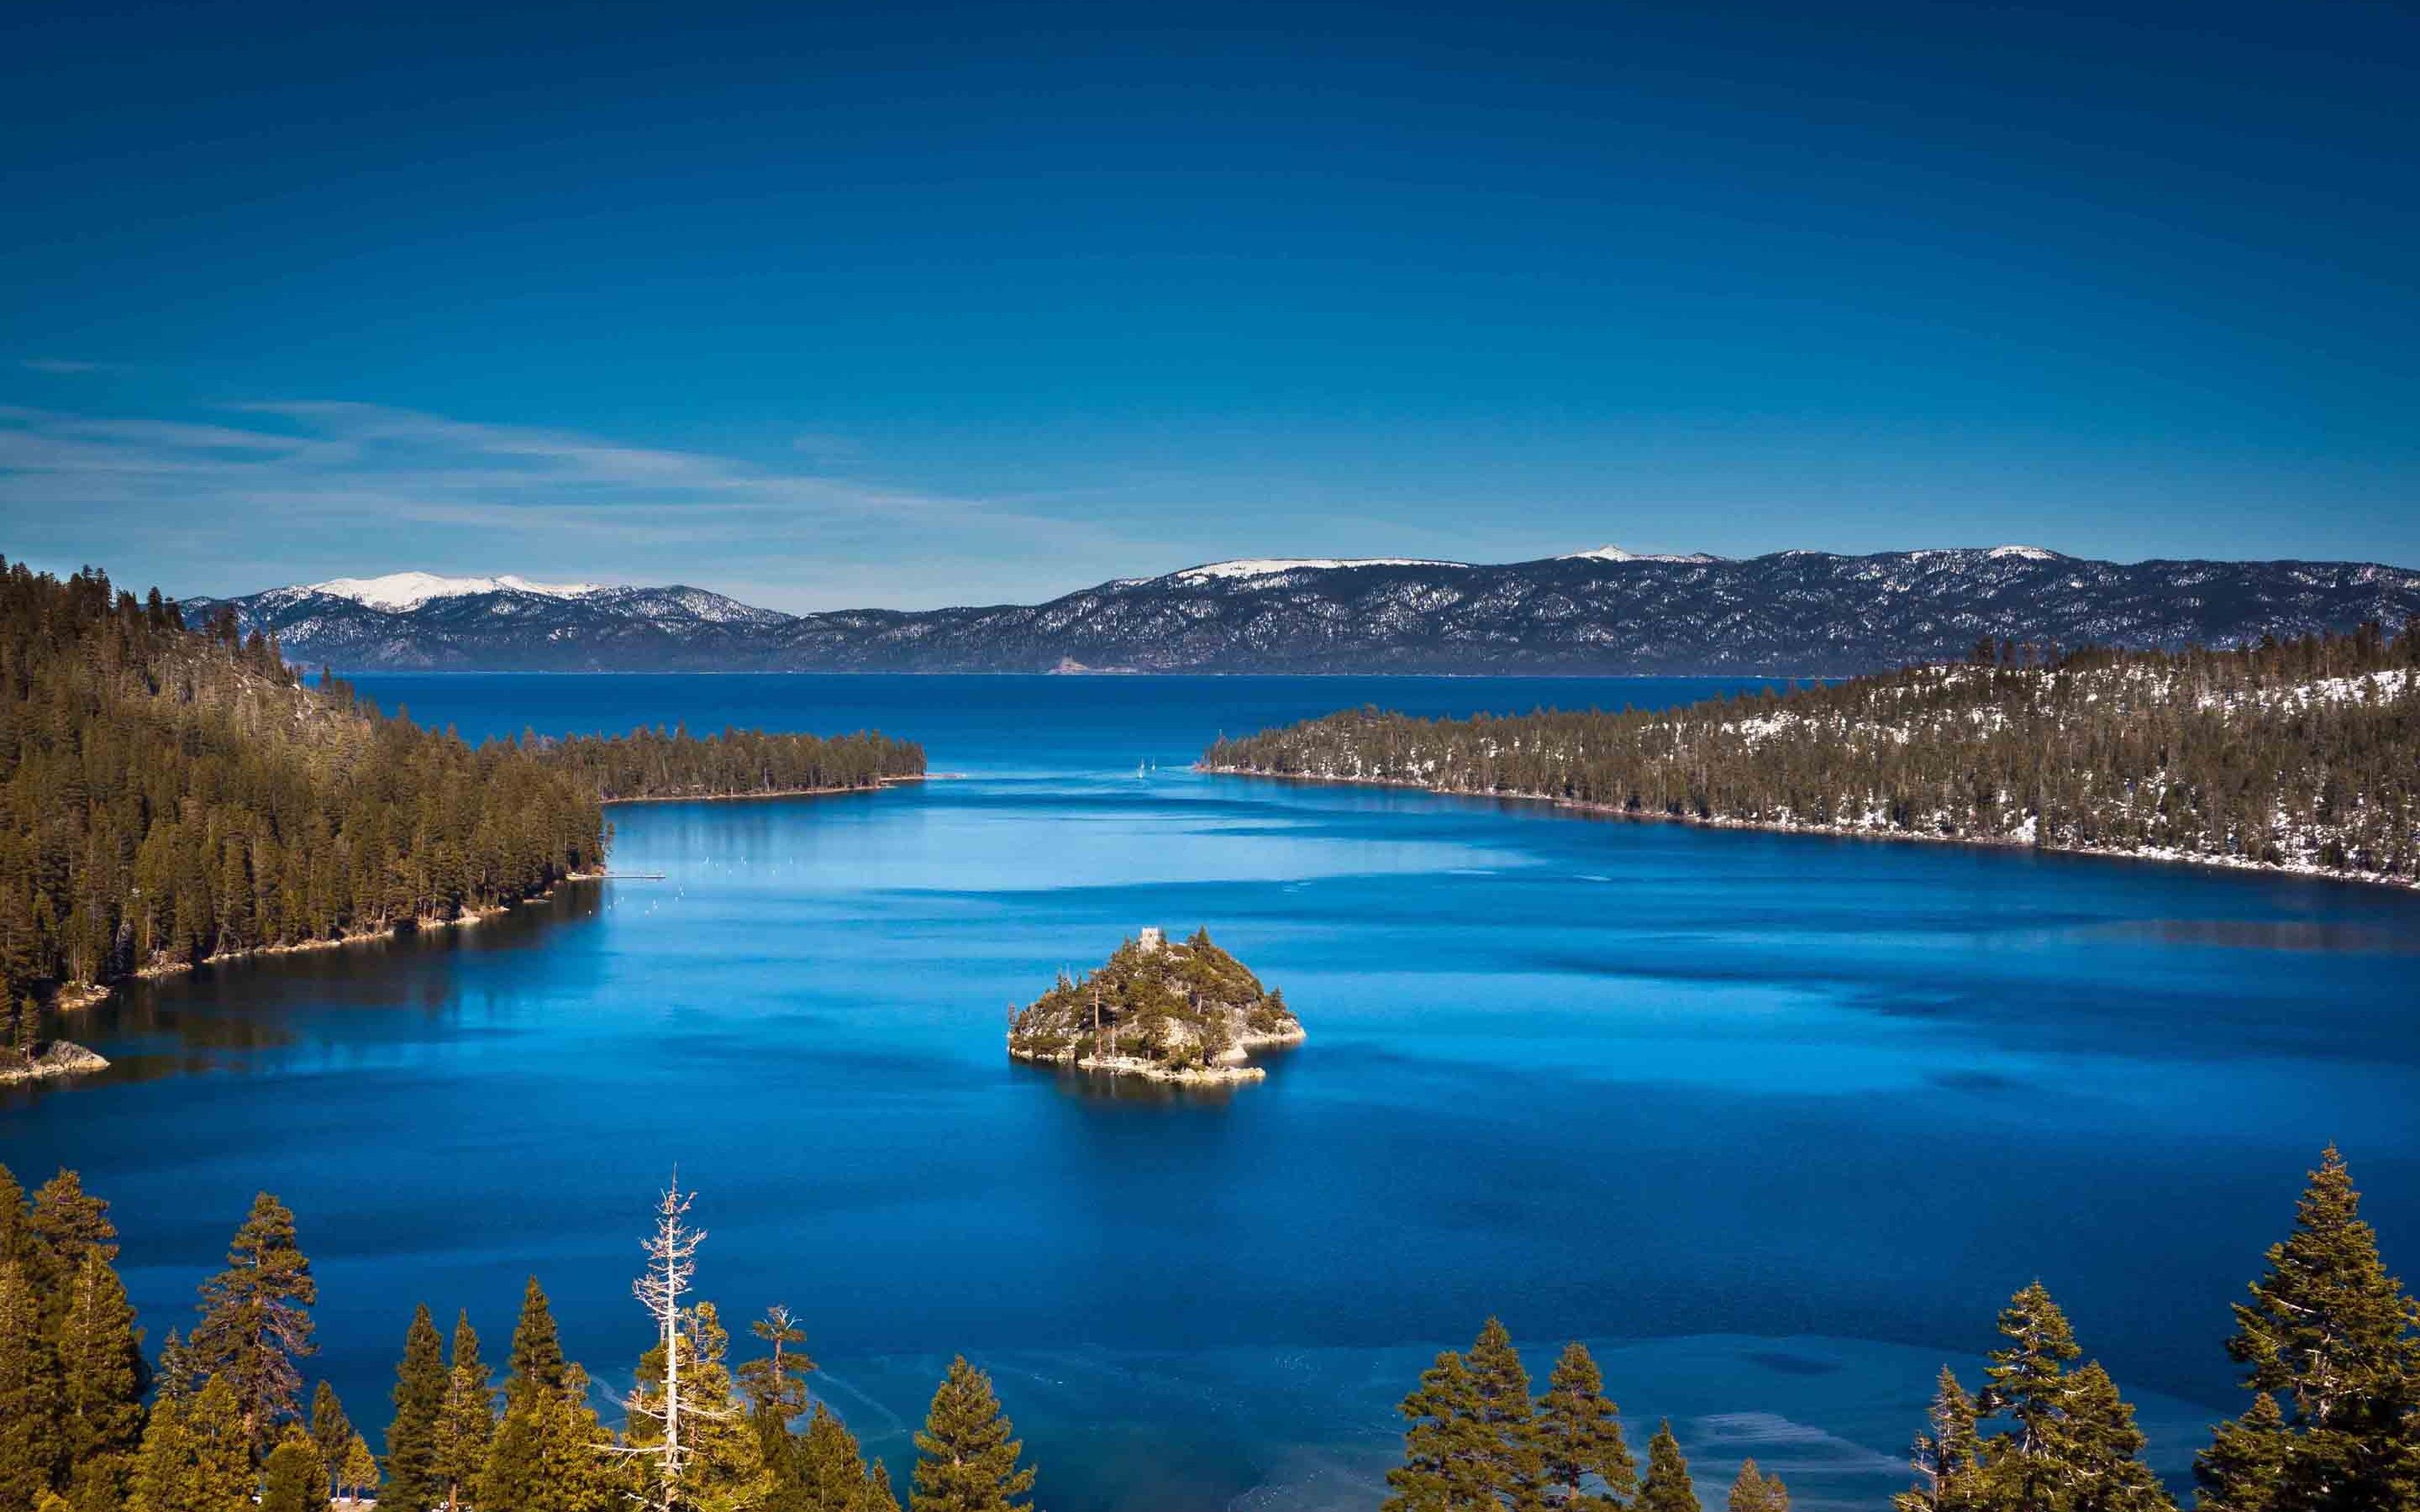 2880x1800 Wallpaper Lake Tahoe California Usa Mountains Island Blue Sky 2880x1800 Hd Picture Image